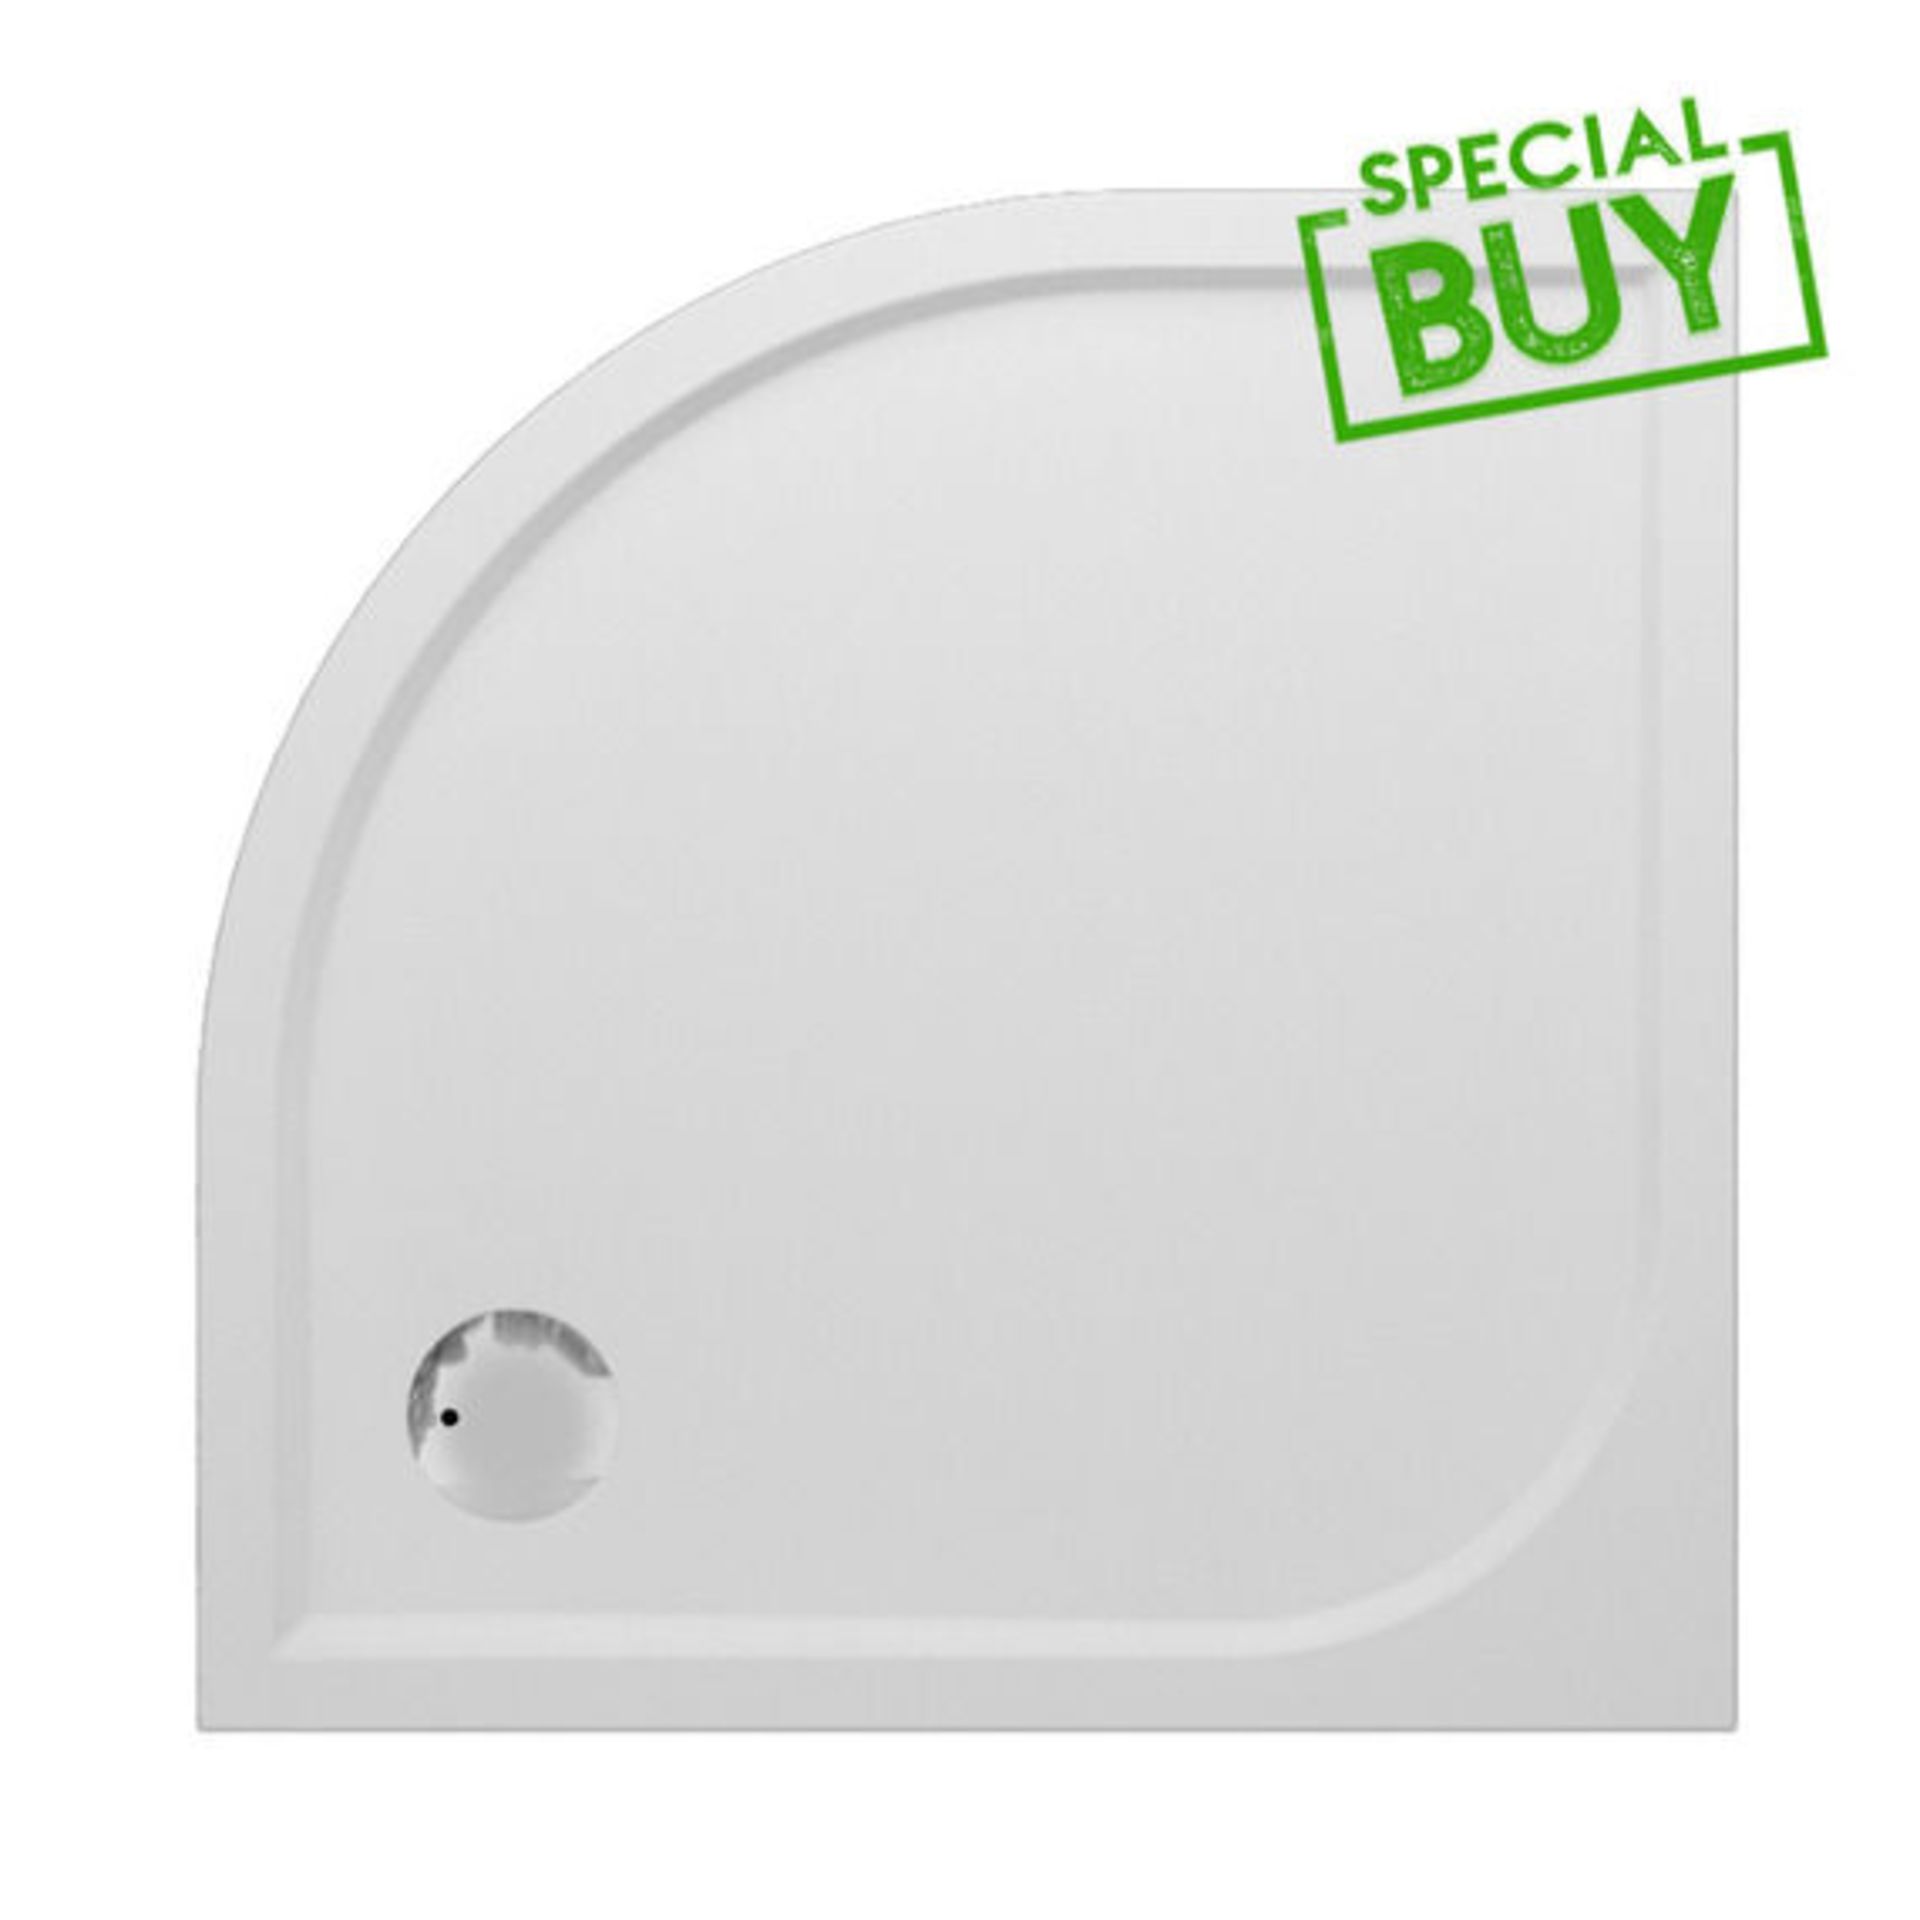 Serene 800 x 800mm quadrant low profile shower tray. Brand new, sealed box.